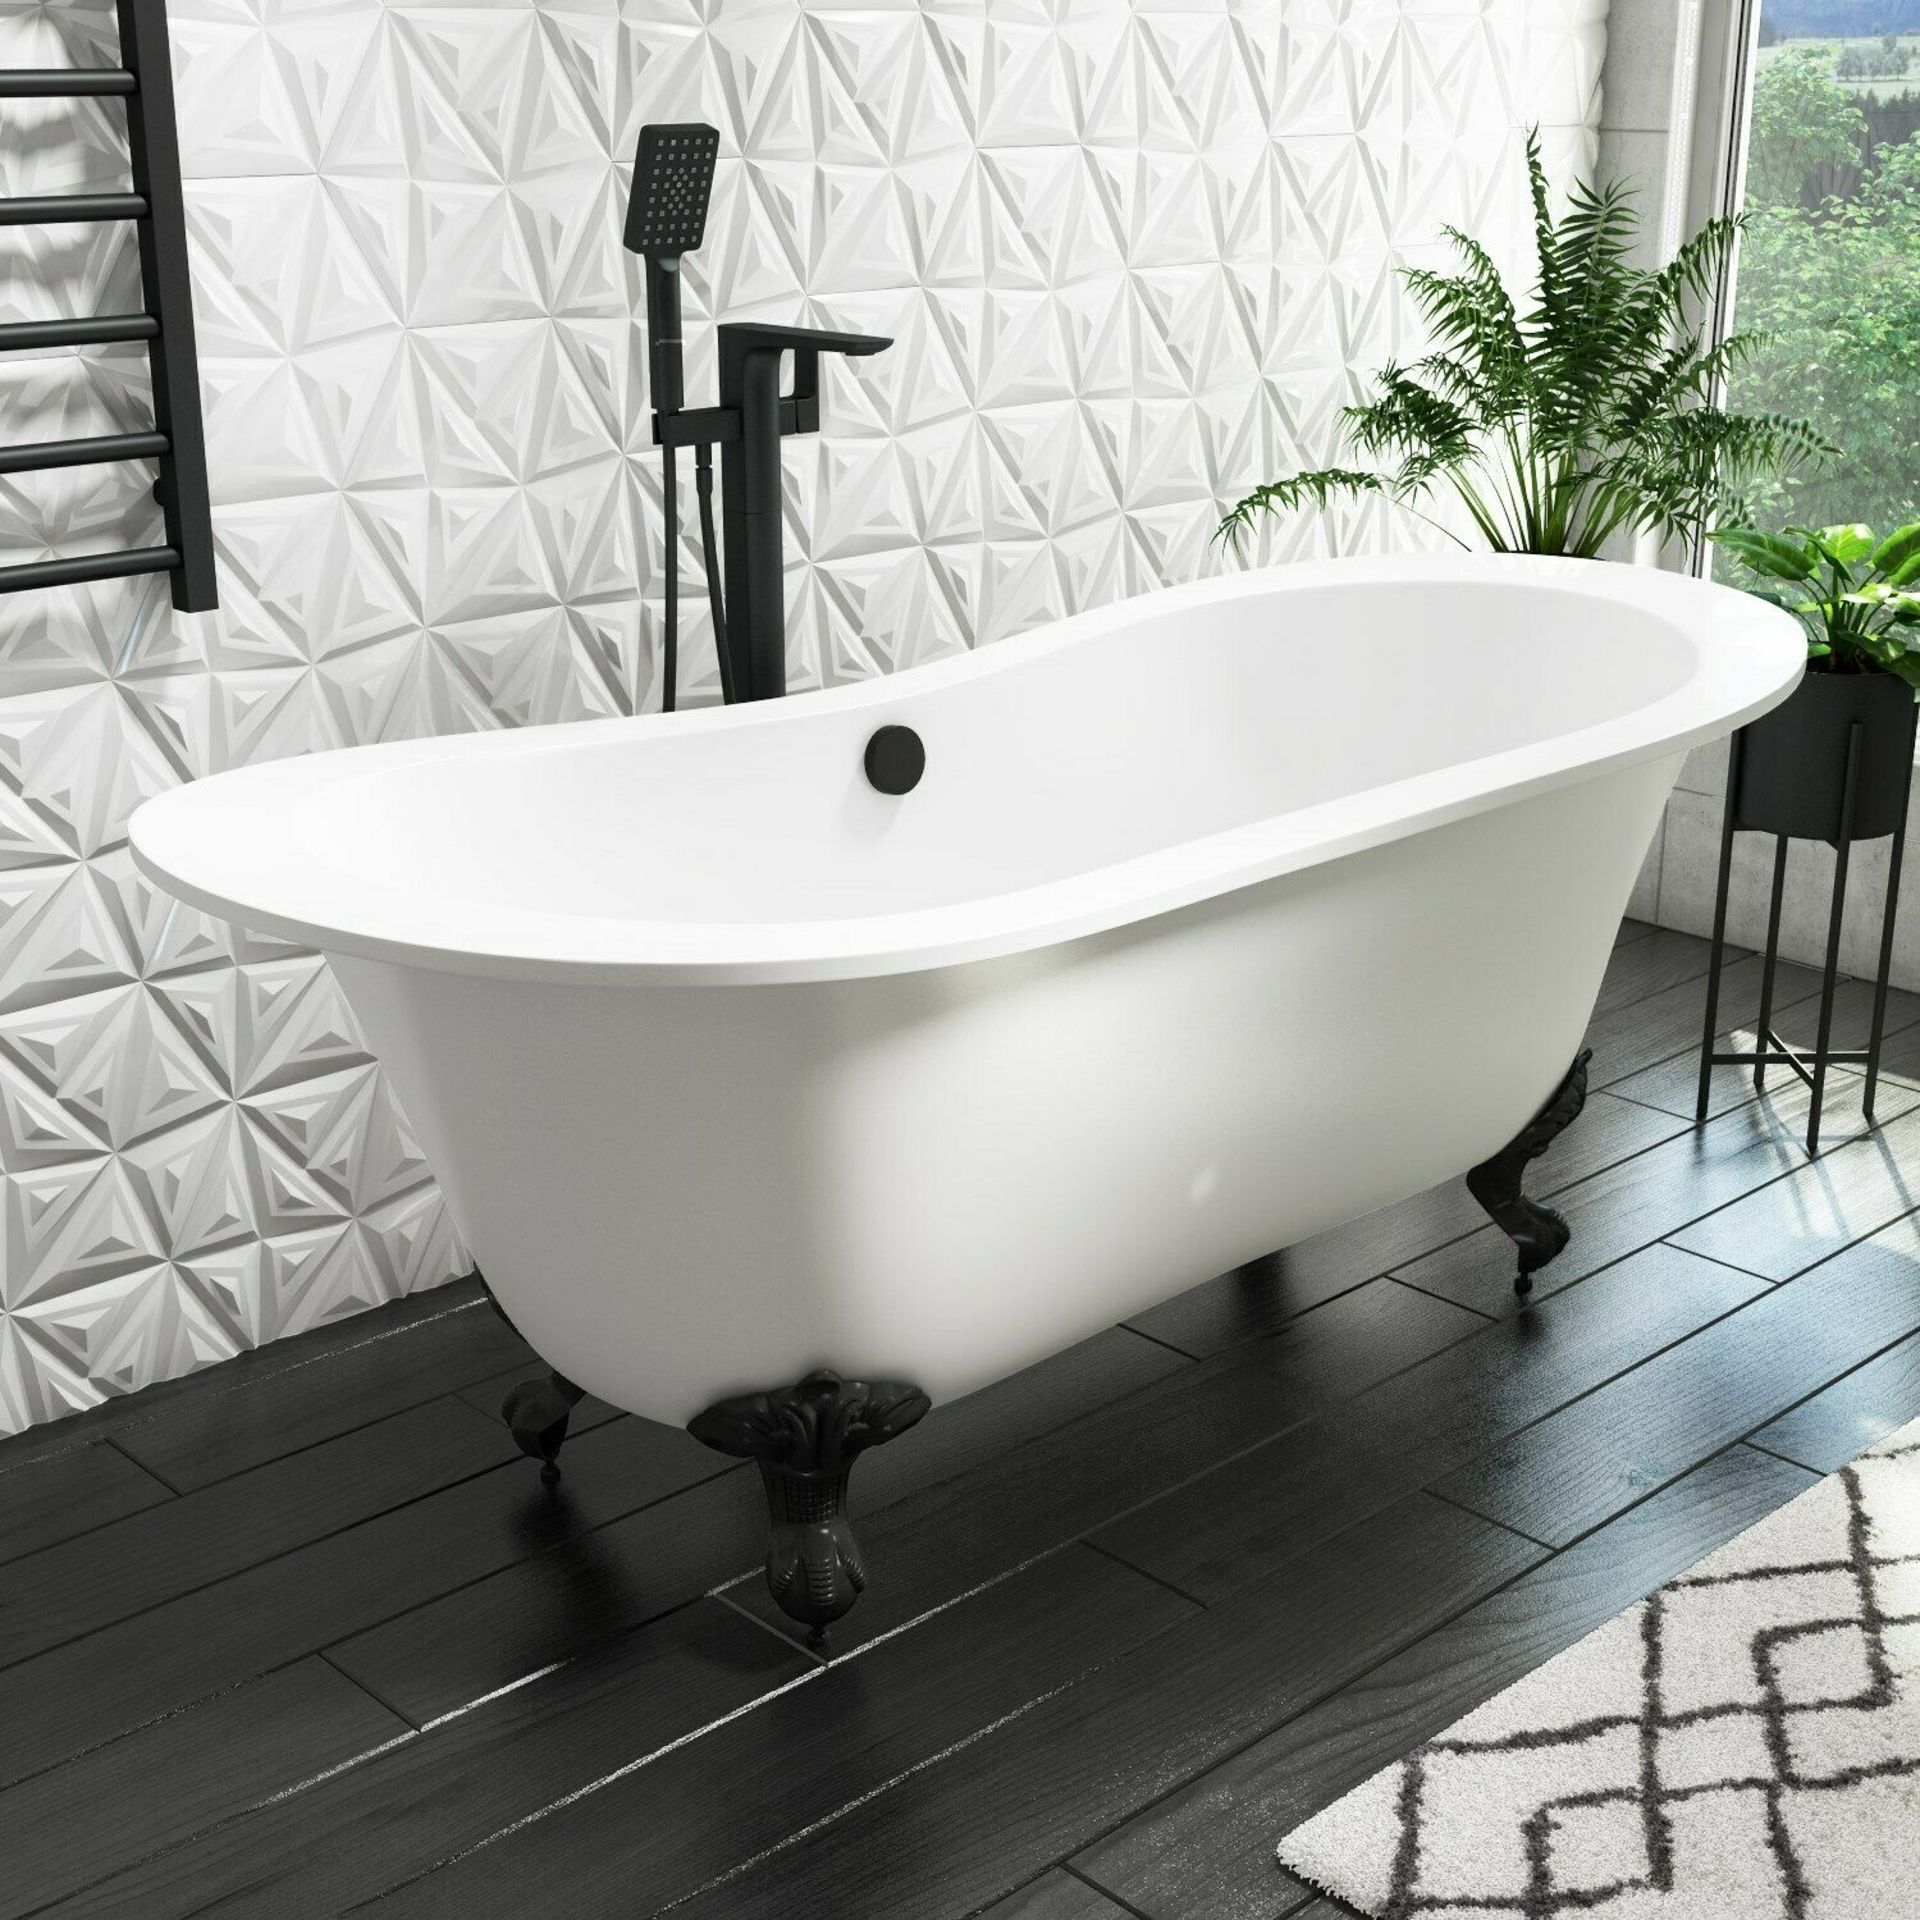 New & Boxed Black Canim Freestanding Bath Mixer Tap & Handheld Shower Head. Tb3086B. Construc... - Image 2 of 3